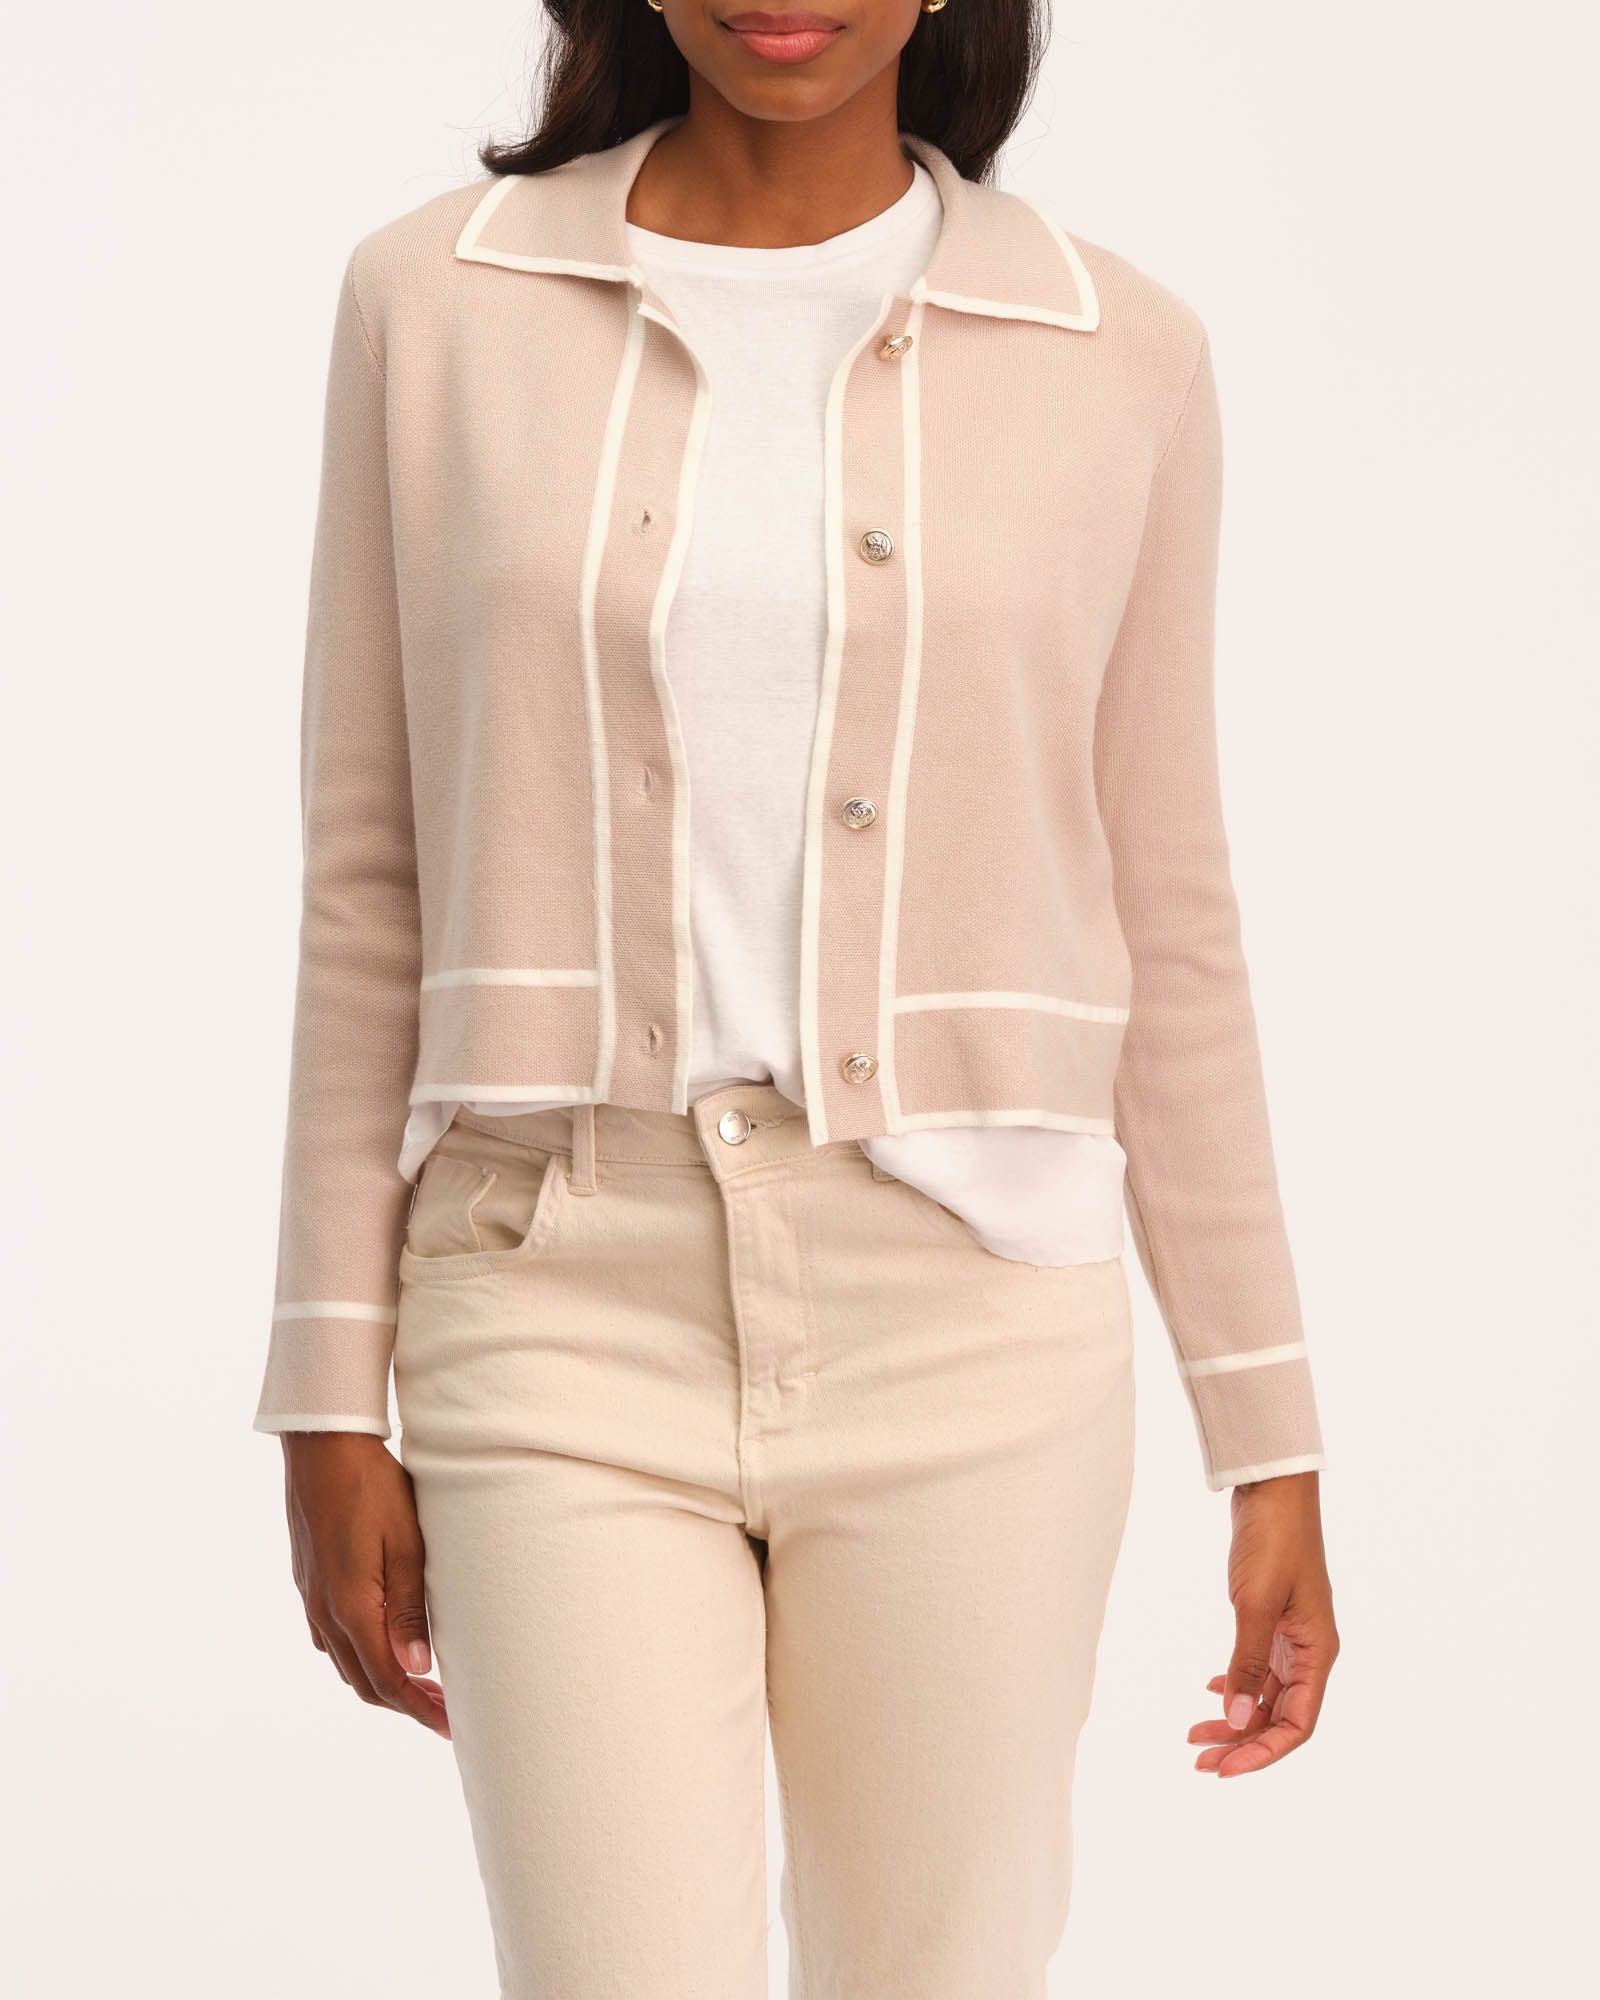 T Tahari Women's Contrast Trim Button Front Sweater Jacket | JANE + MERCER